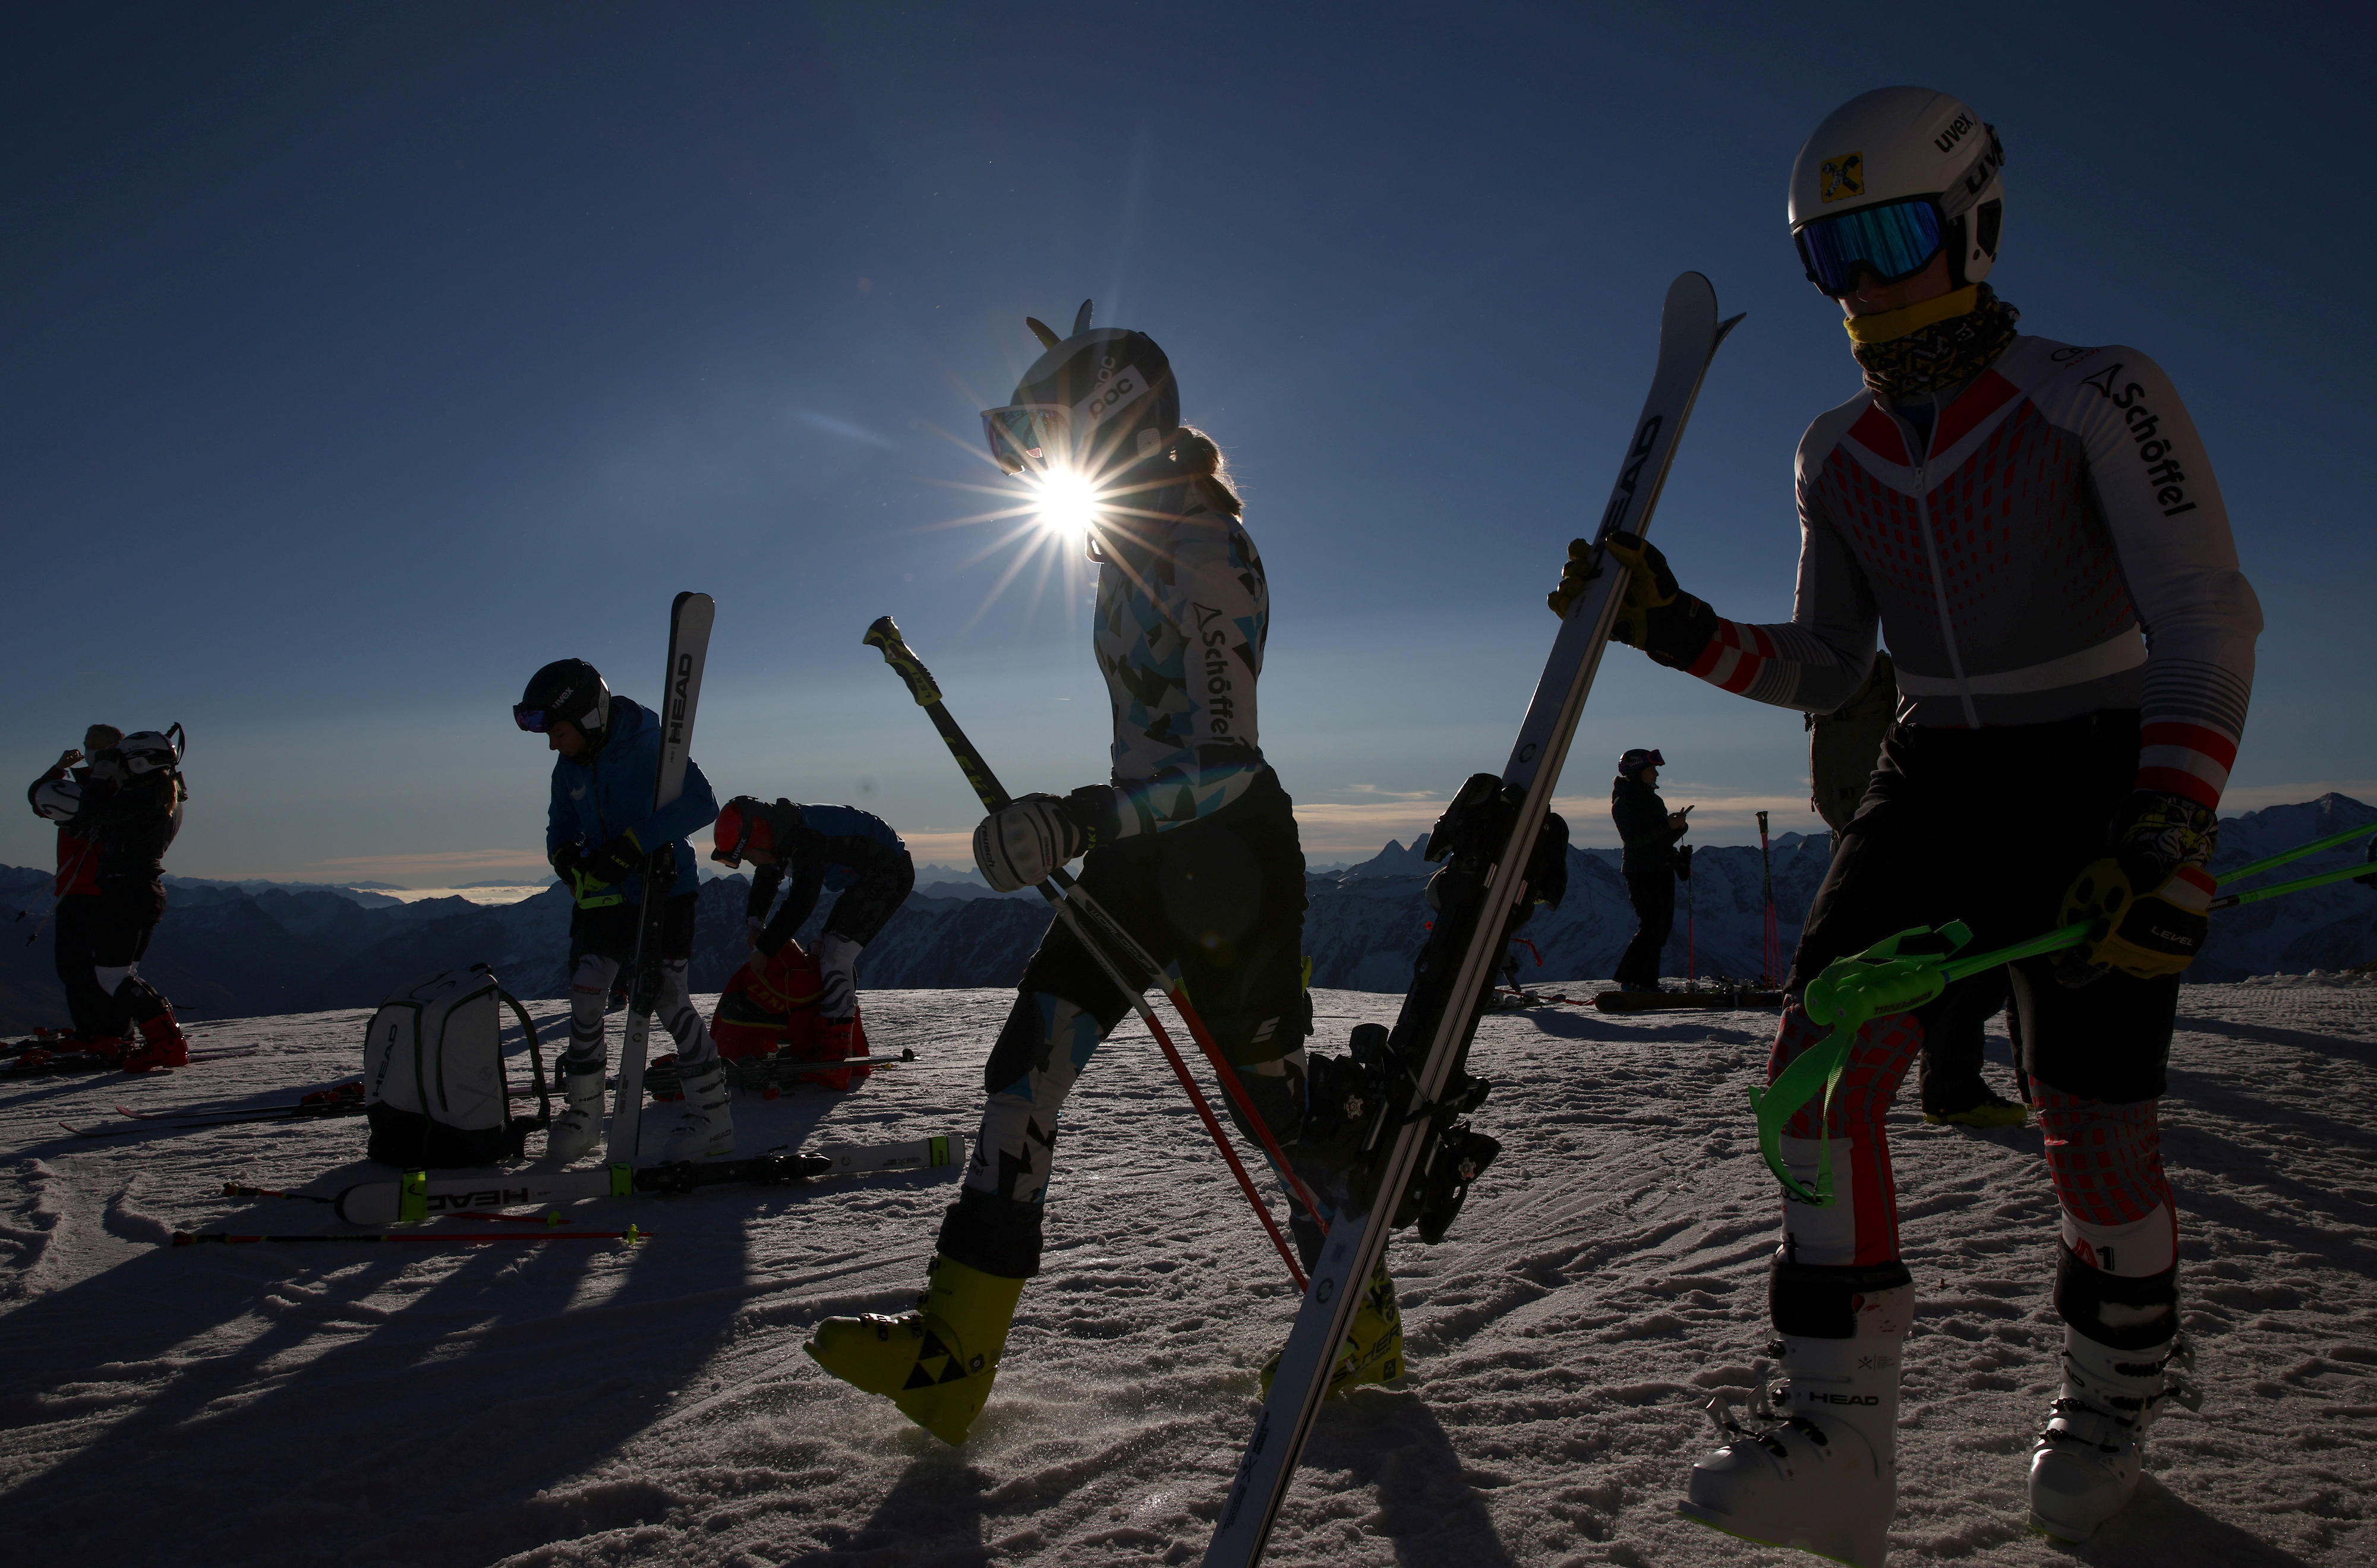 New Ski Federation president Johan Eliasch addresses obstacles, expresses immense confidence for Beijing 2022